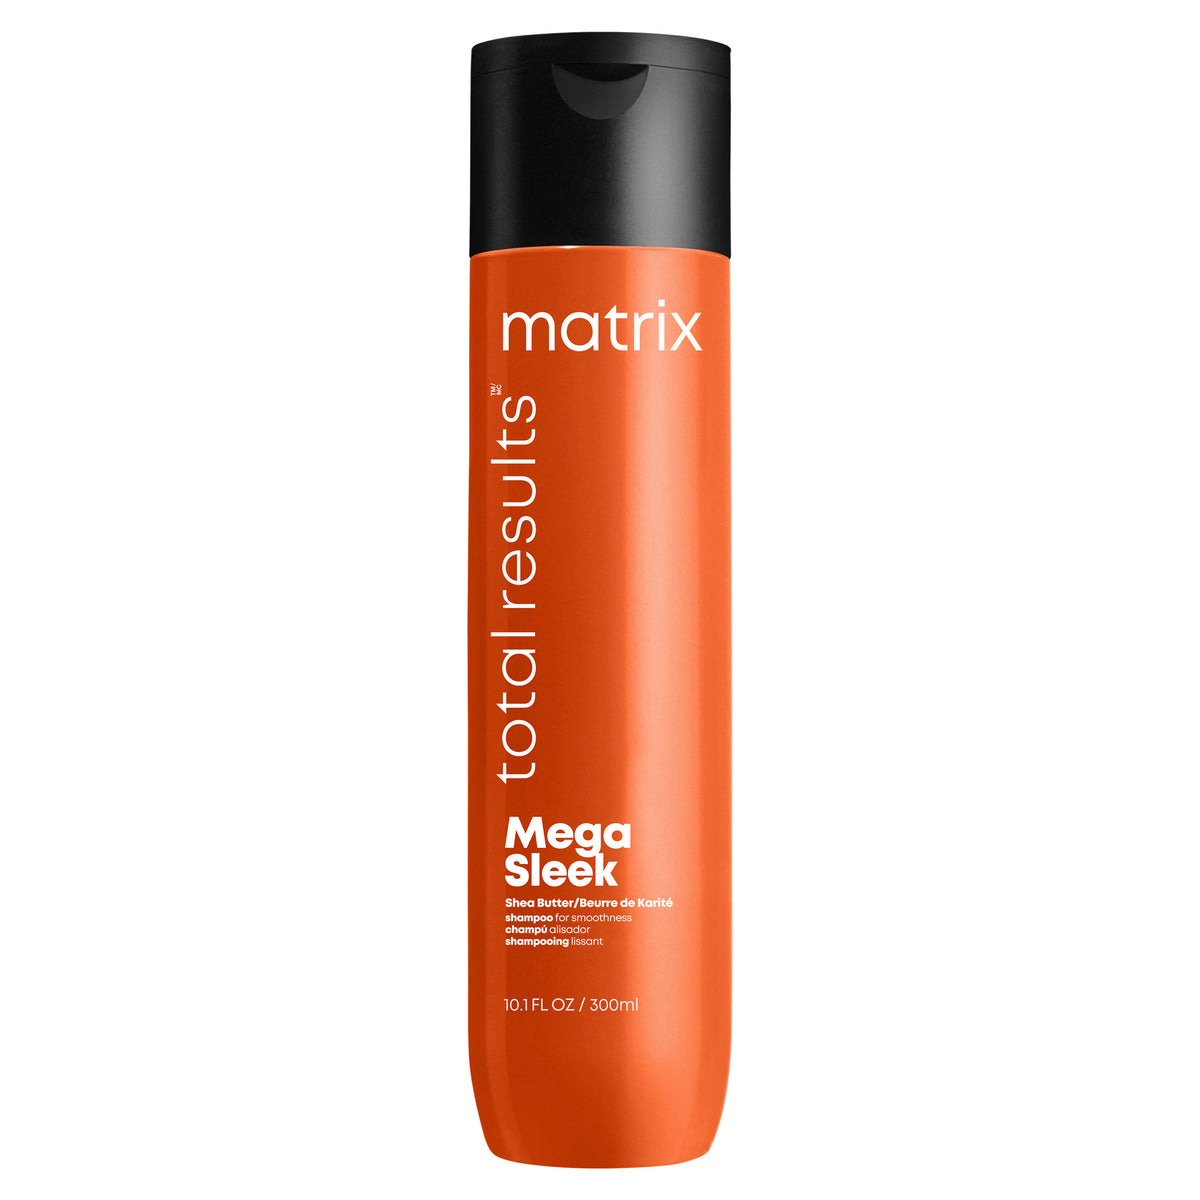 Matrix Mega 300ml – Product Hair Care